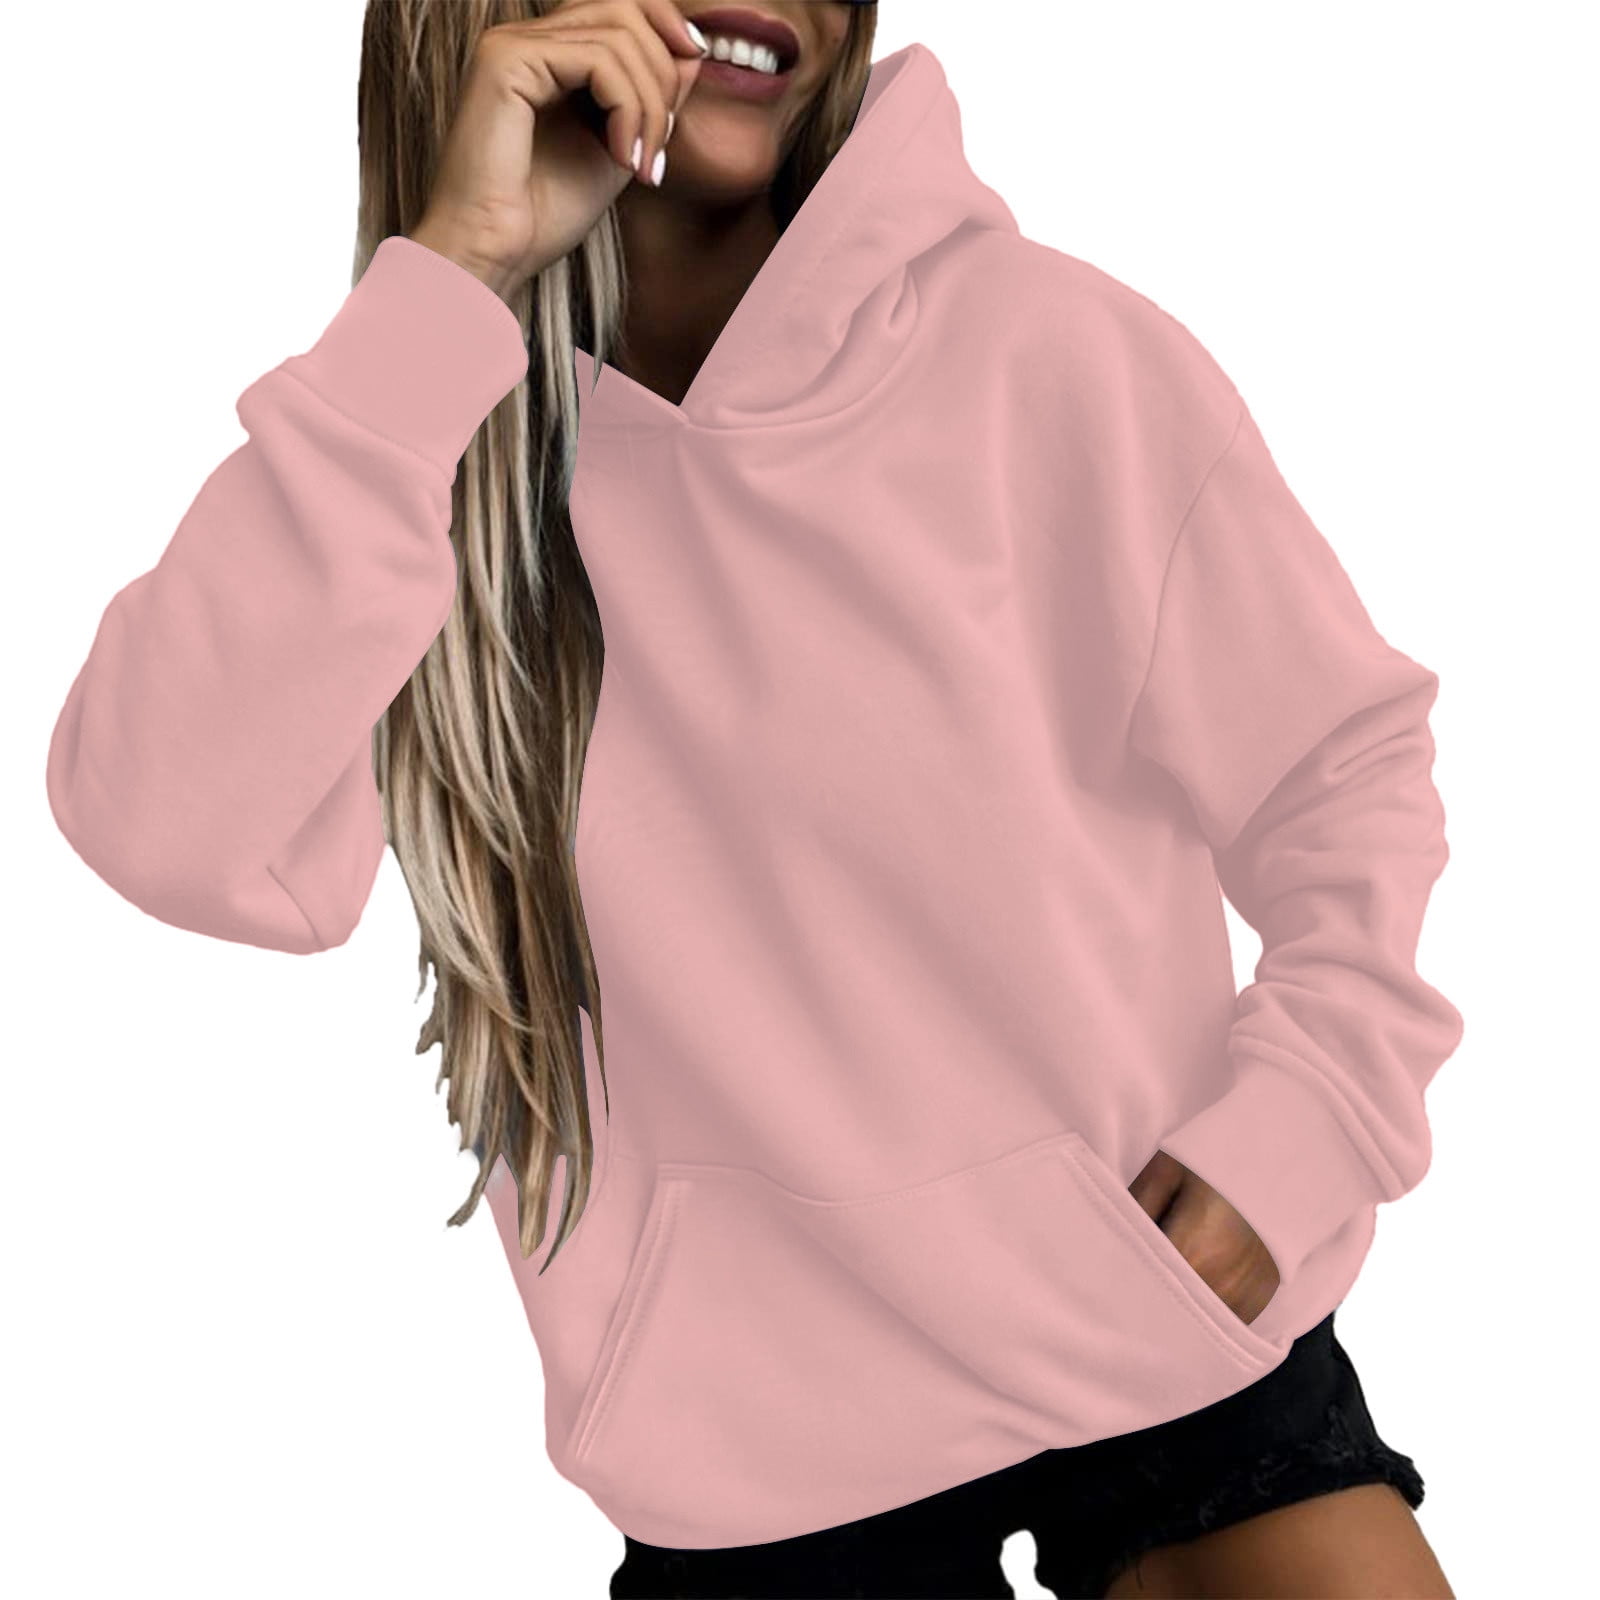 Yyeselk Hoodies for Women Solid Color Tops Pullover Hooded Sweatshirt with  Pocket Casual Loose Fit Long Sleeve Blouse Shirt Hoodie Sweatshirts  White#01 M 